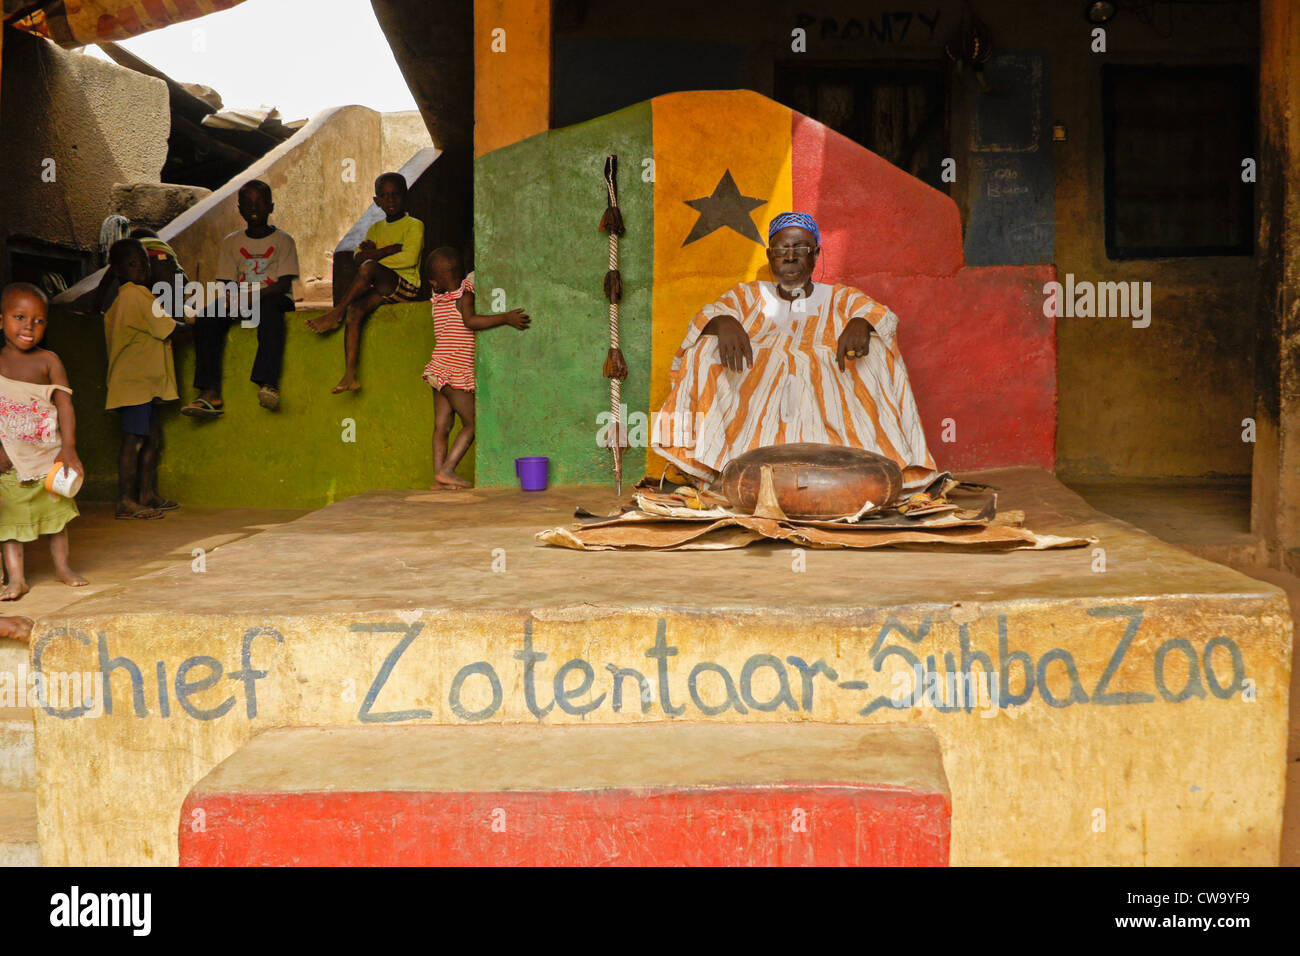 Le chef (king) Zotentaar-SuhbaZaa de la tribu Talensi, Tongo, Ghana Banque D'Images